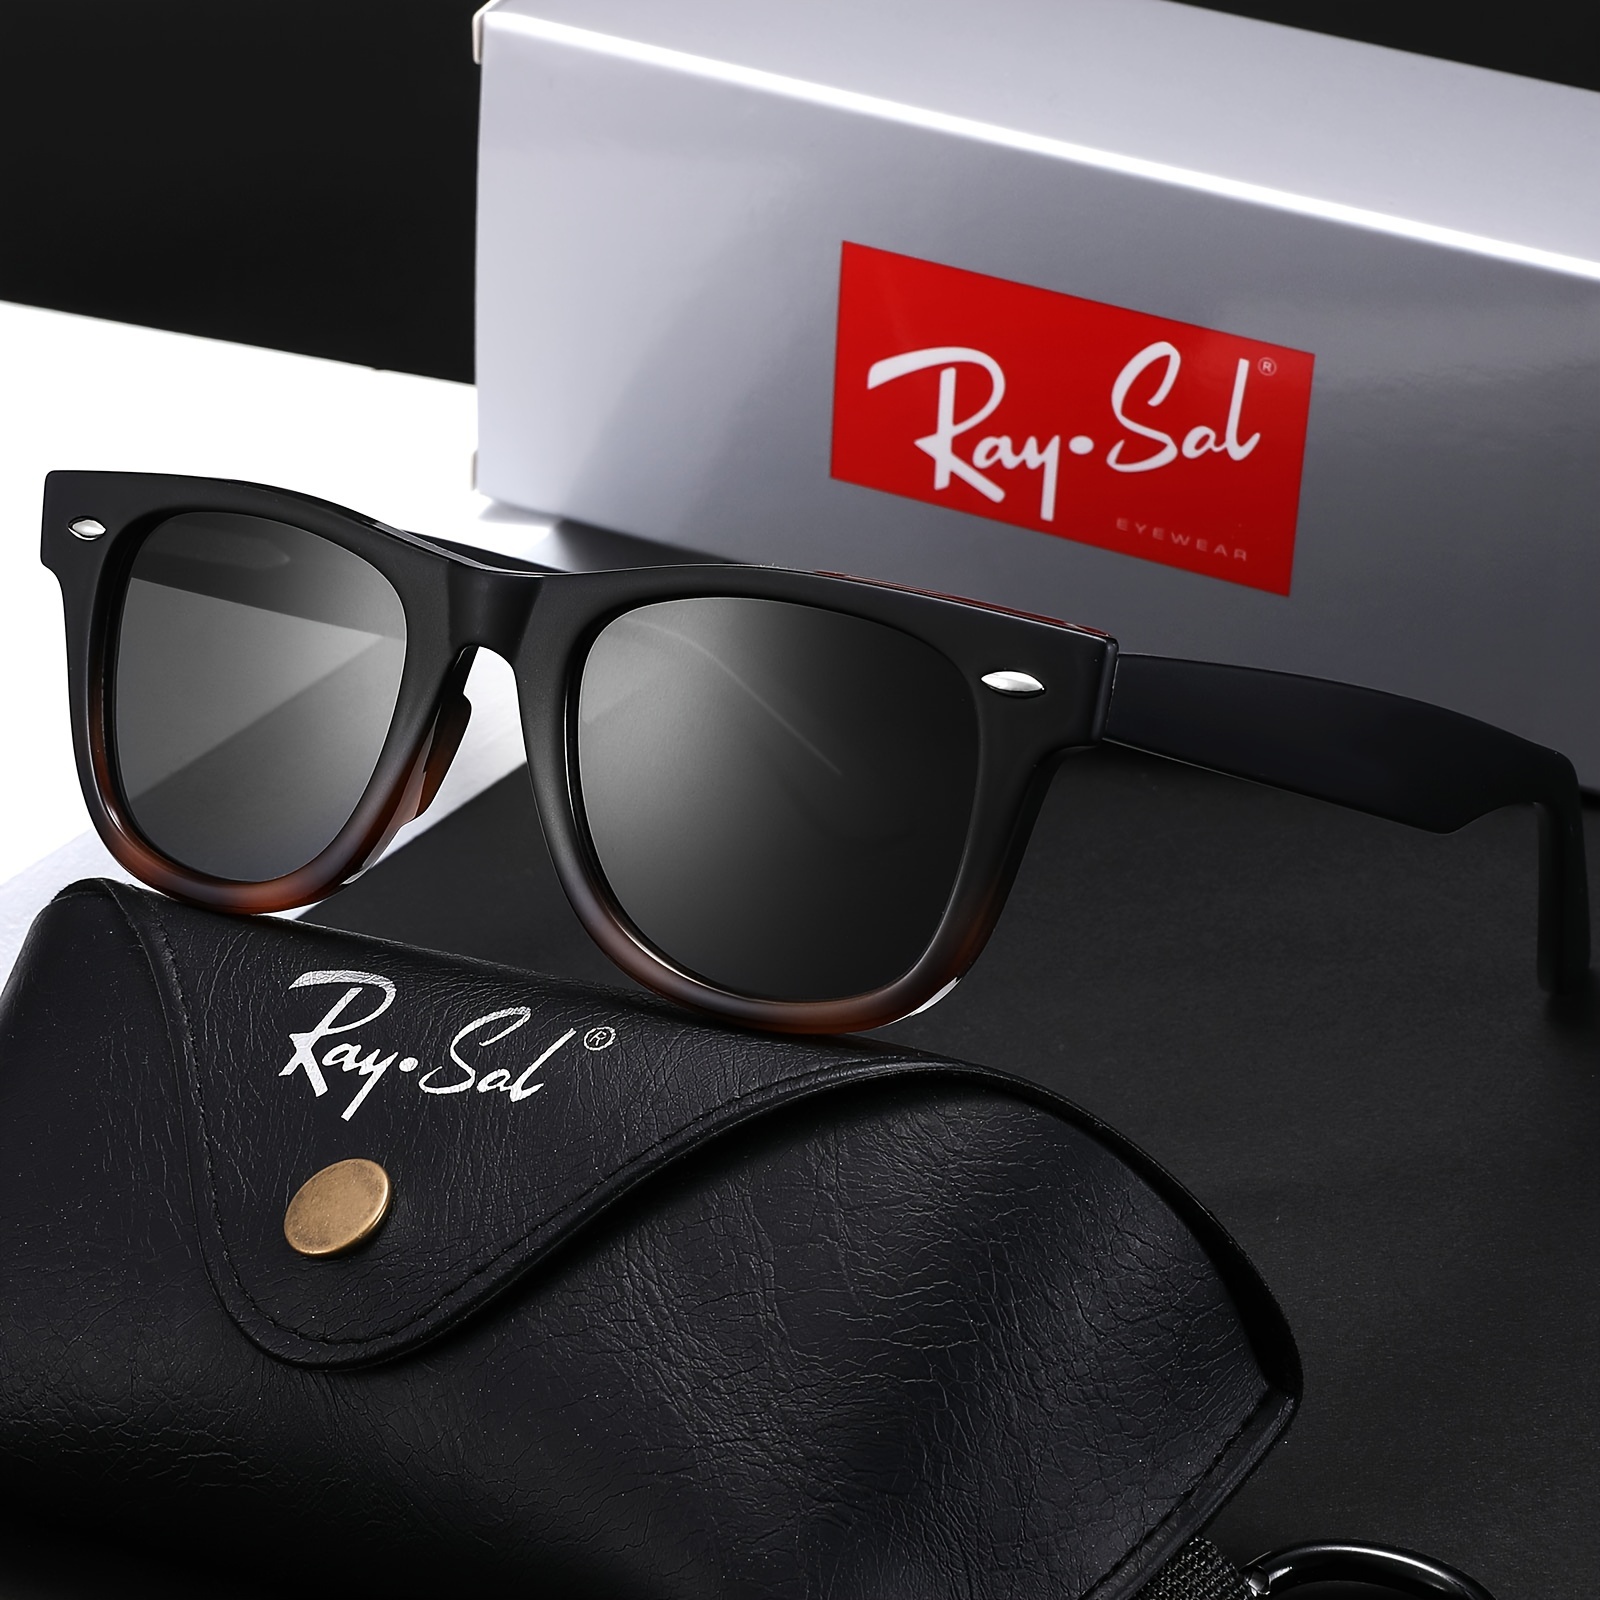 

Raysol Trendy Fashion Glasses For Women Men Retro Square Full Rim Glasses Anti Glare Sun Shades Protection Shades